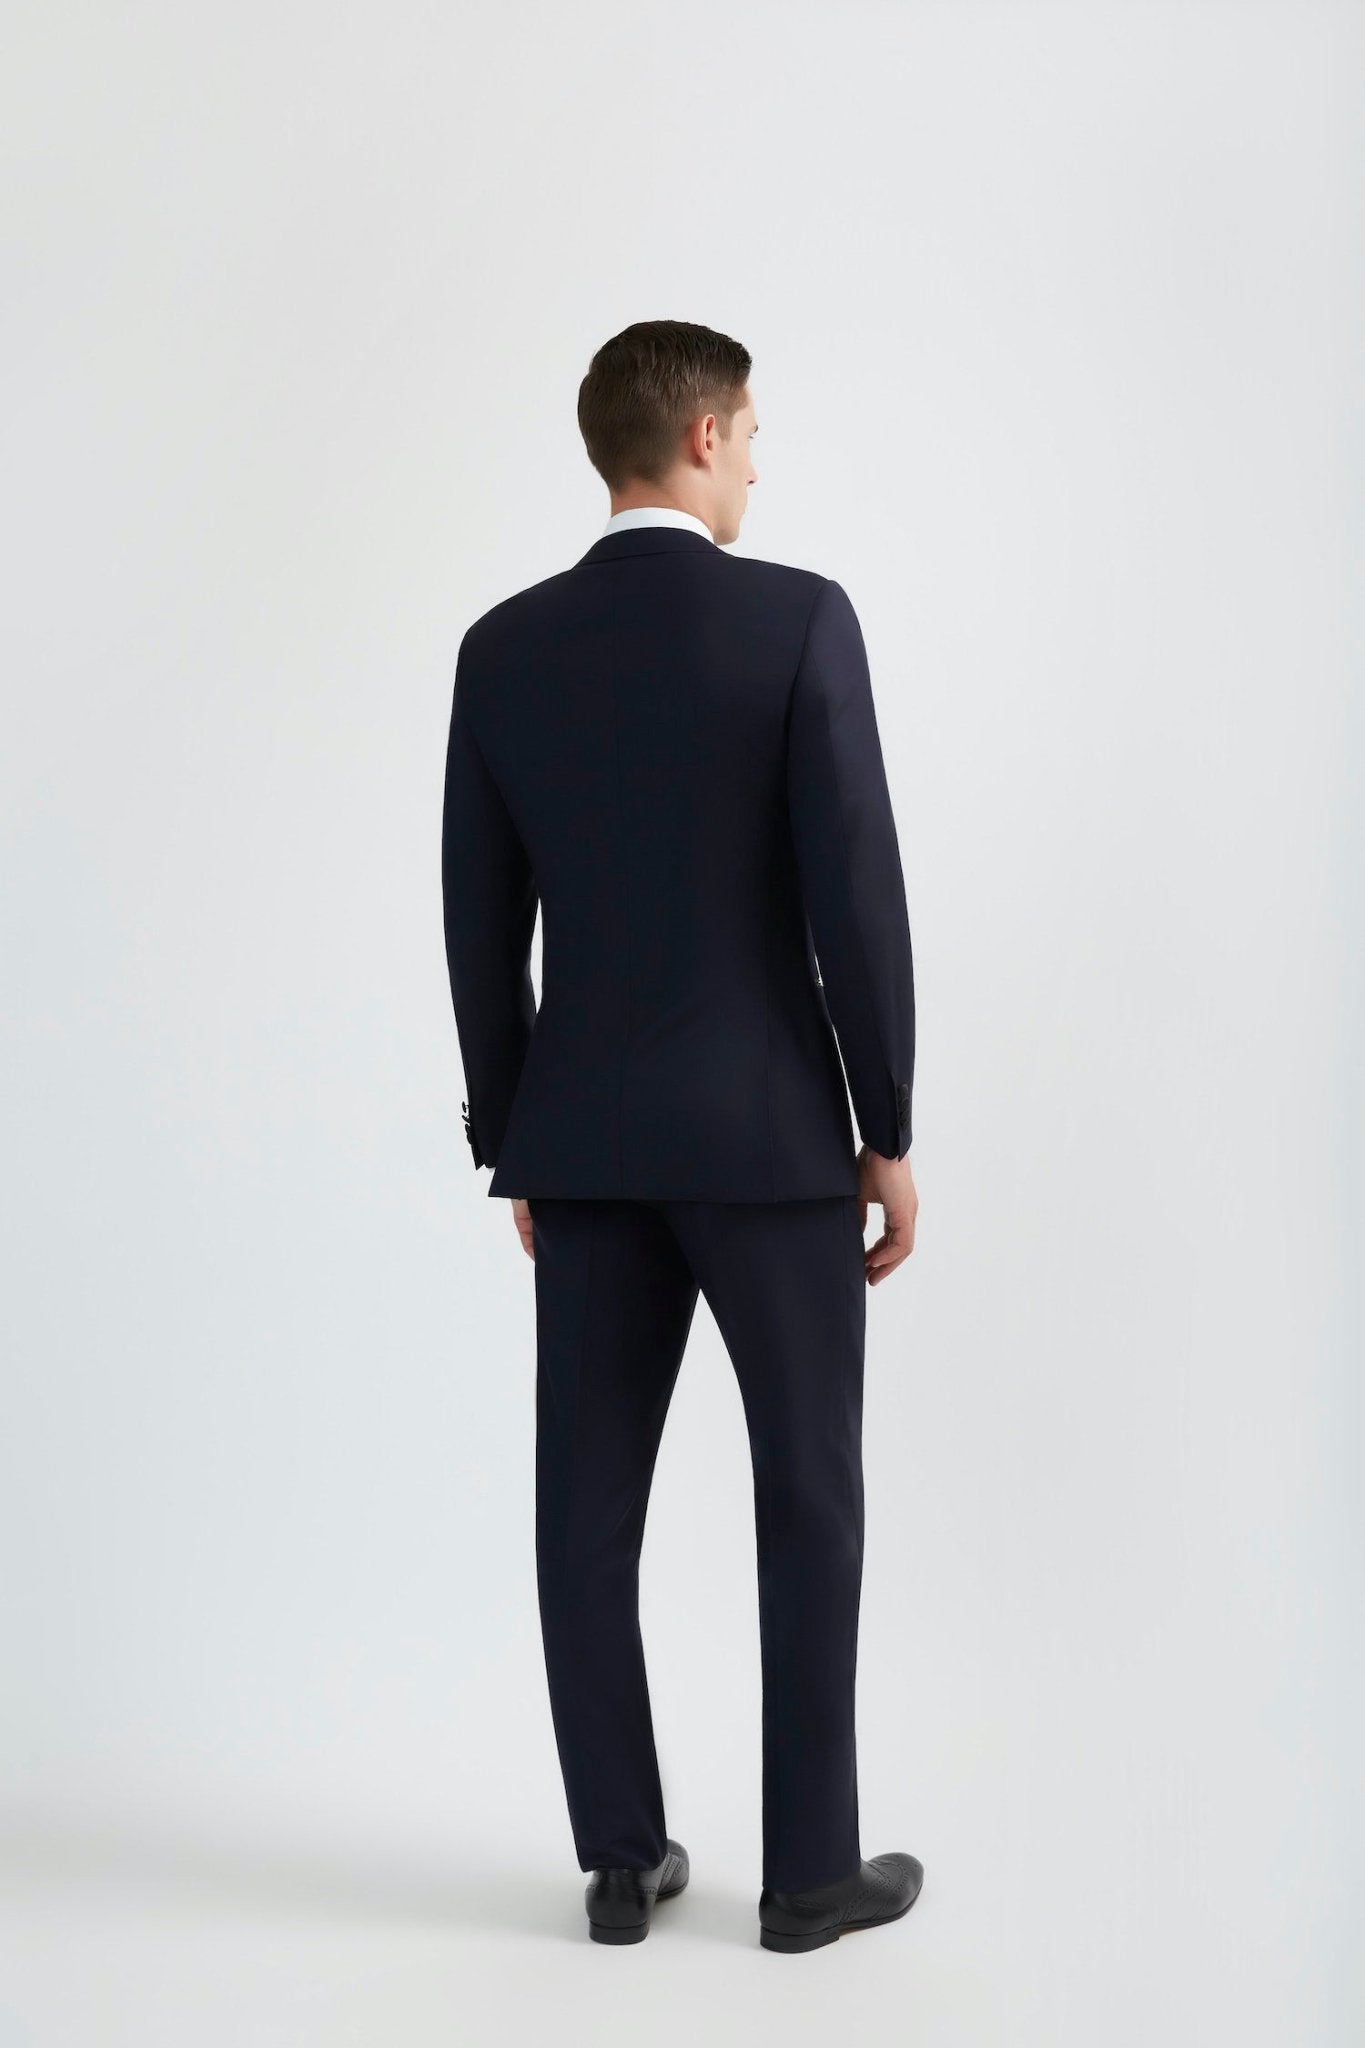 Luxurious 100% Super Fine Wool Italian Navy Blue Peak Lapel Tuxedo - My Men's Shop